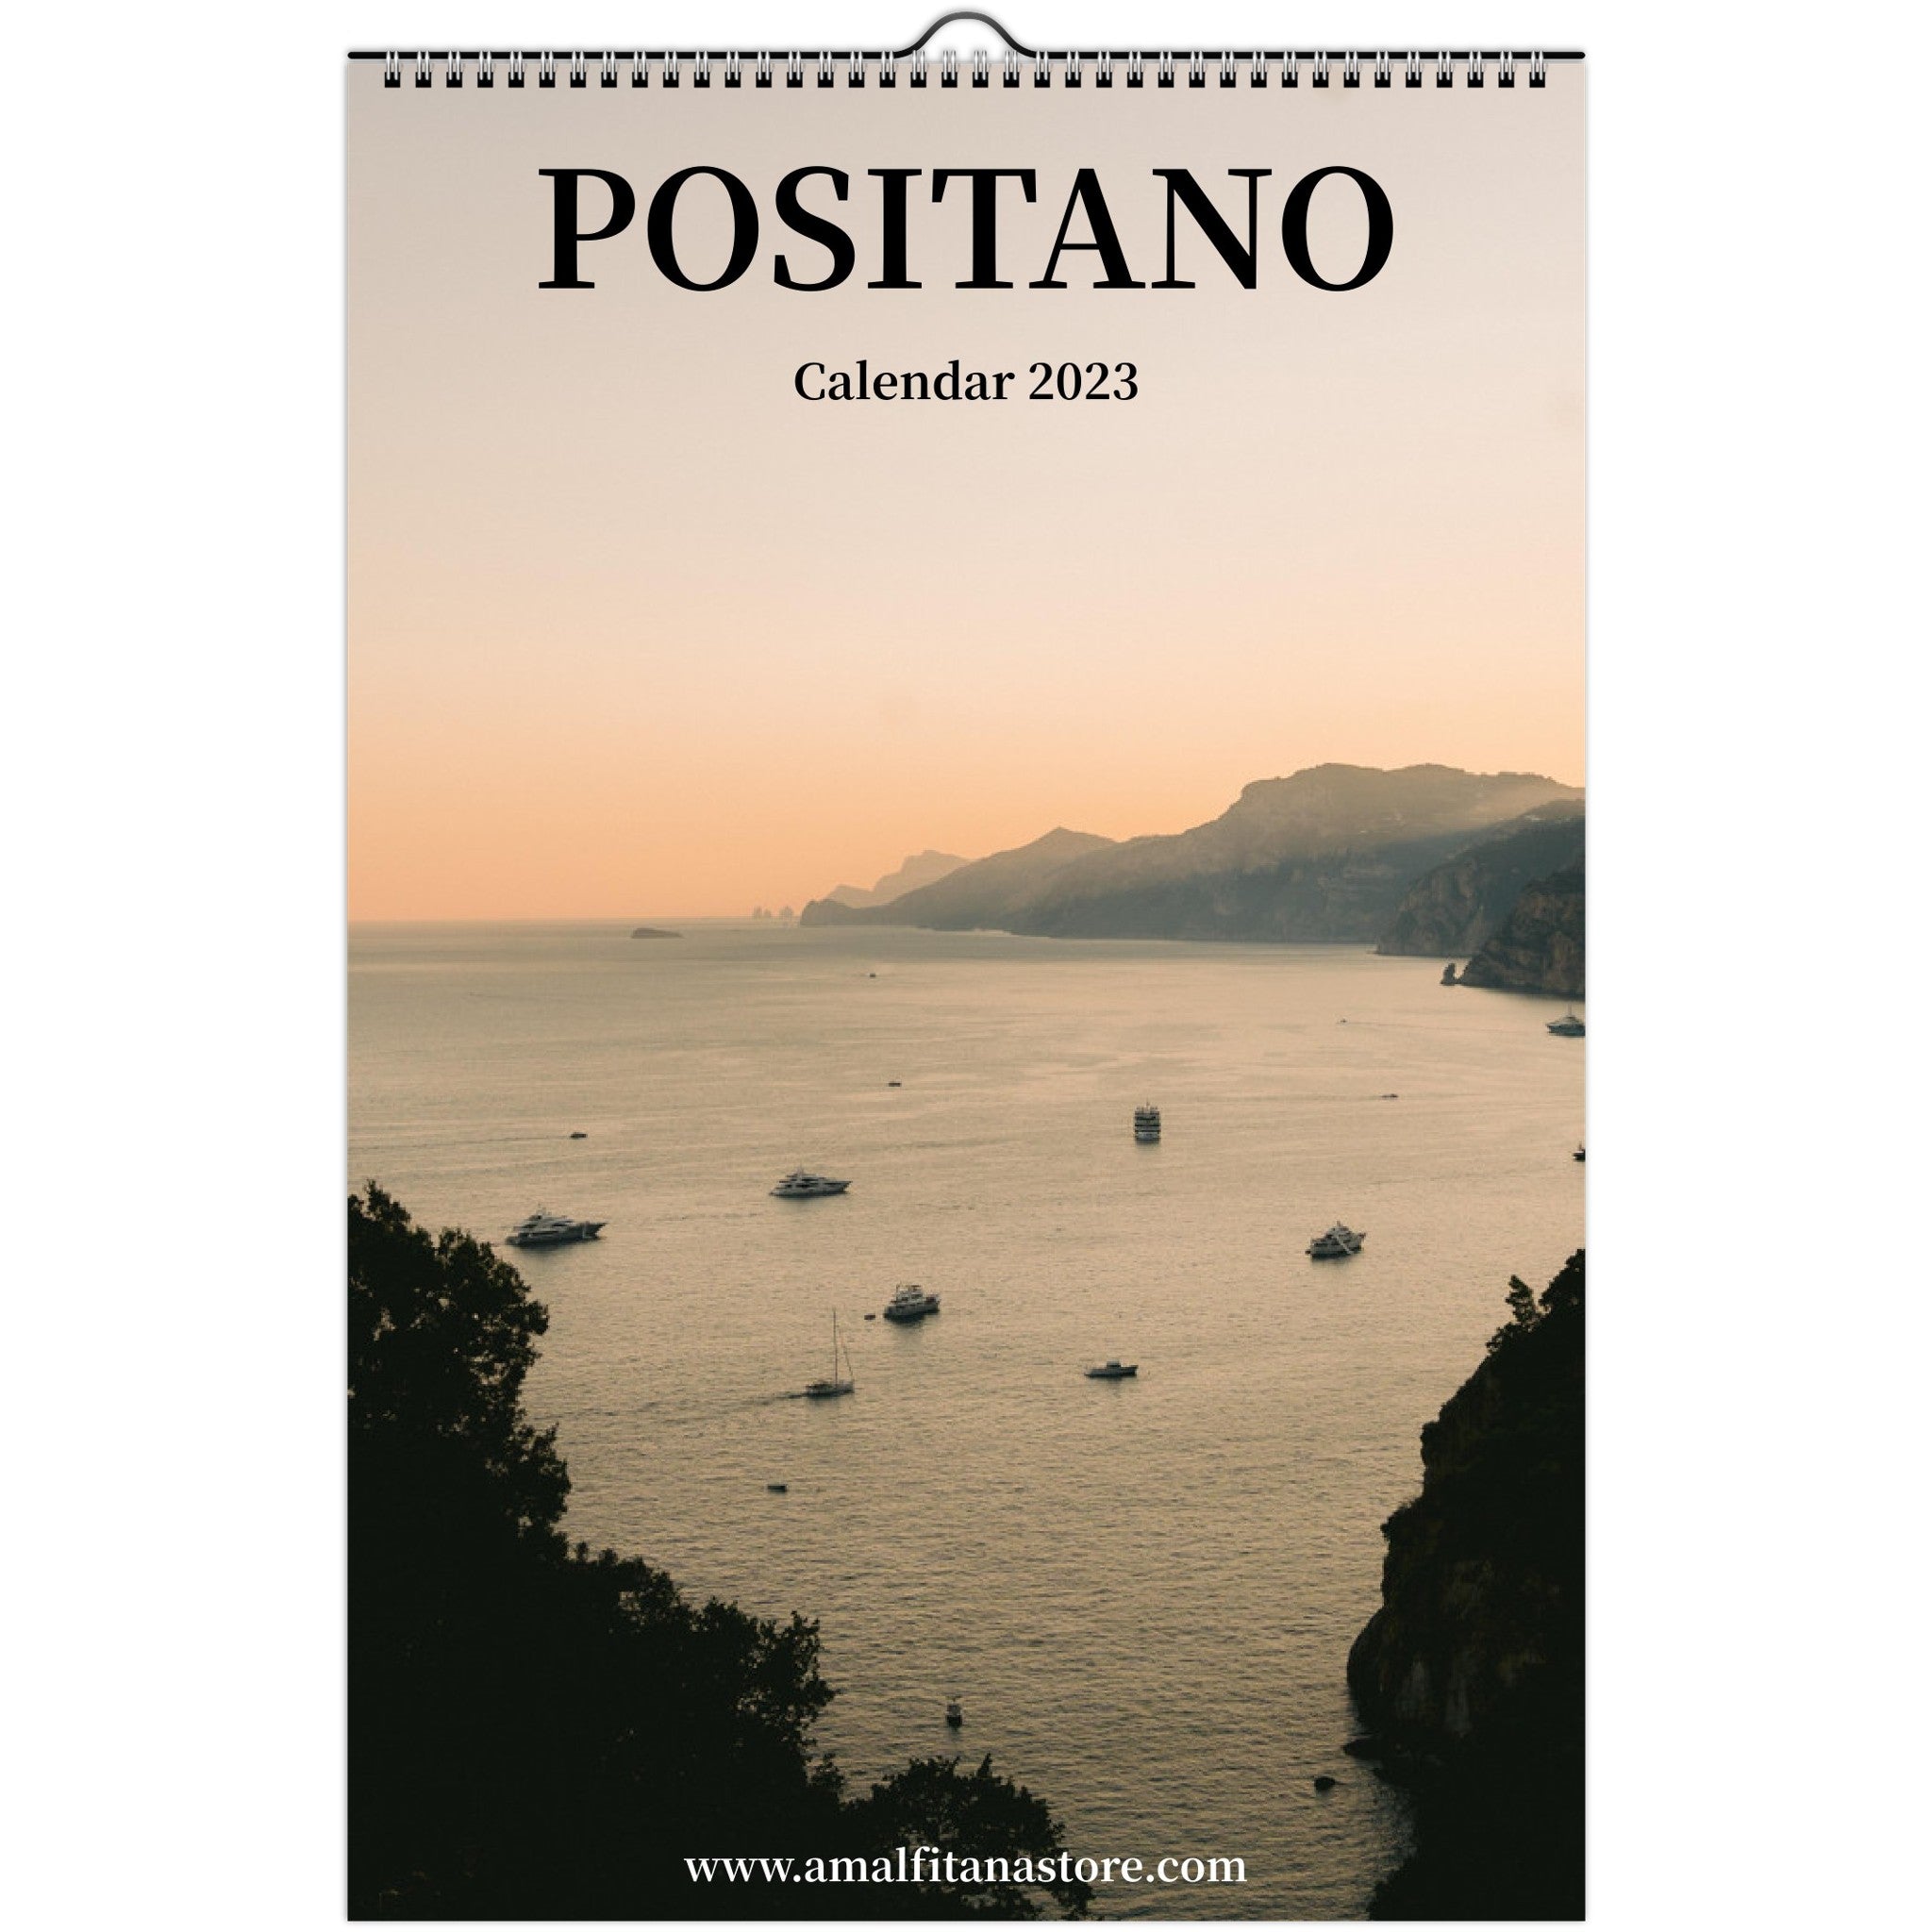 Positano Calendar 2023 - AMALFITANA STORE